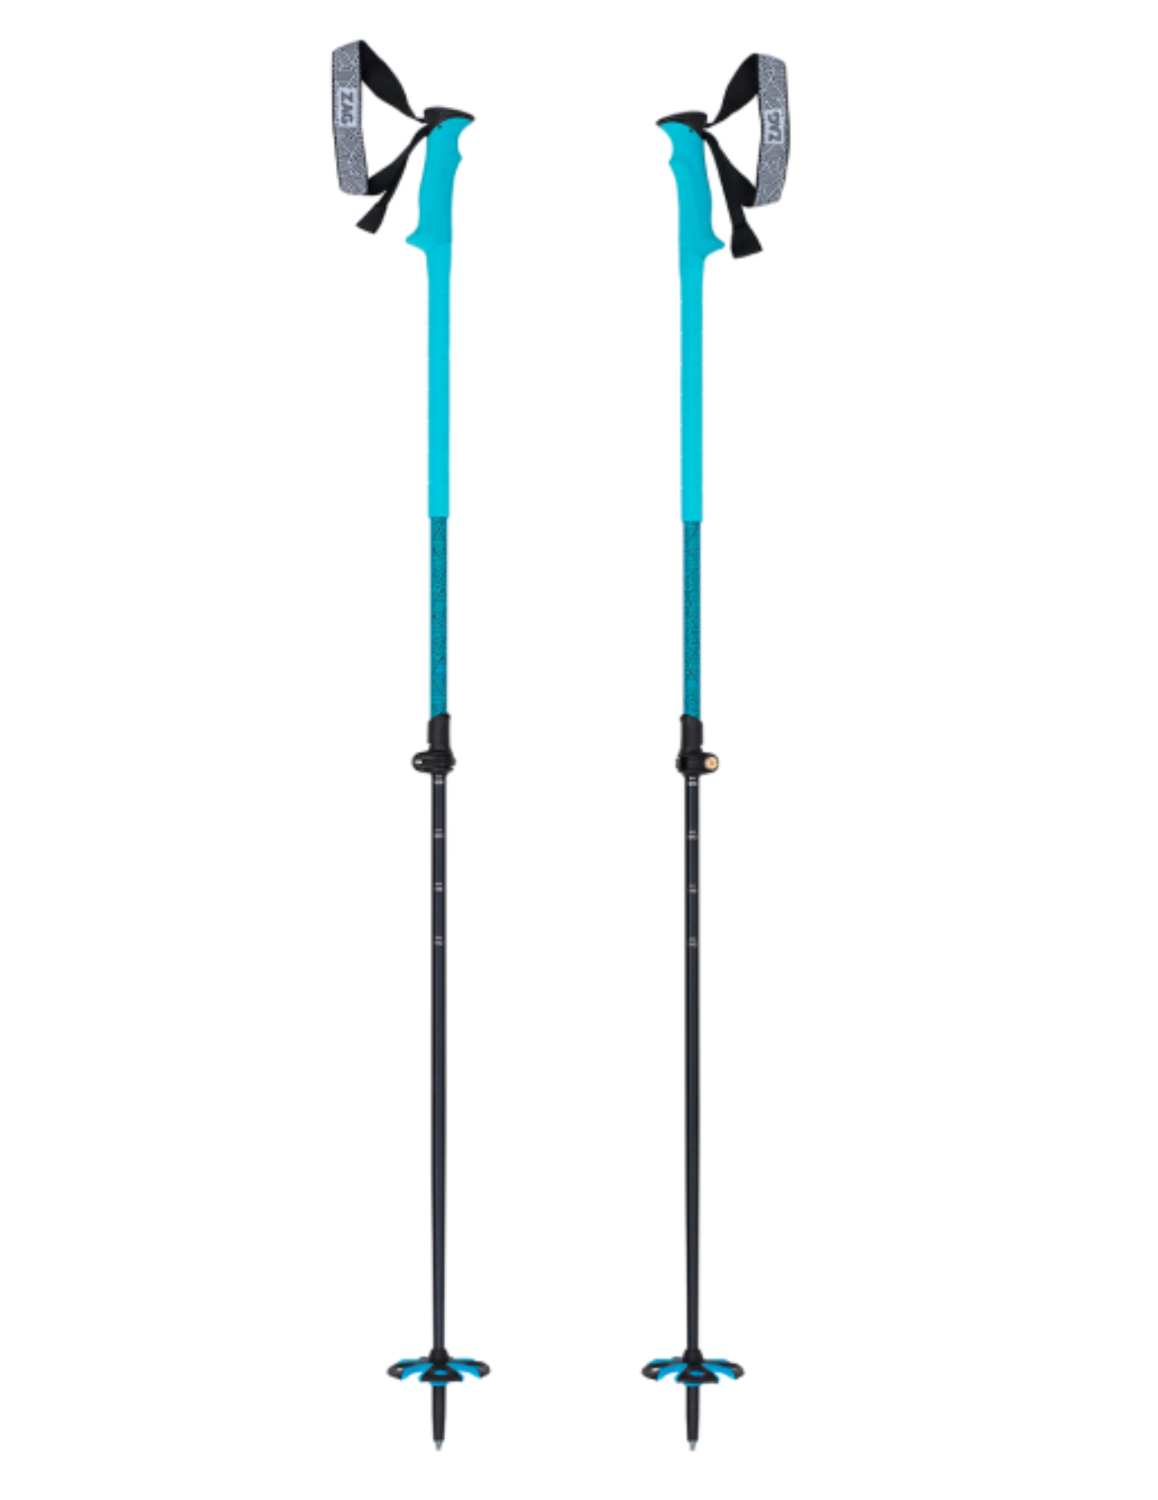 Bâtons de Ski de Randonnée ZAG North Vario : 245 grammes le bâton